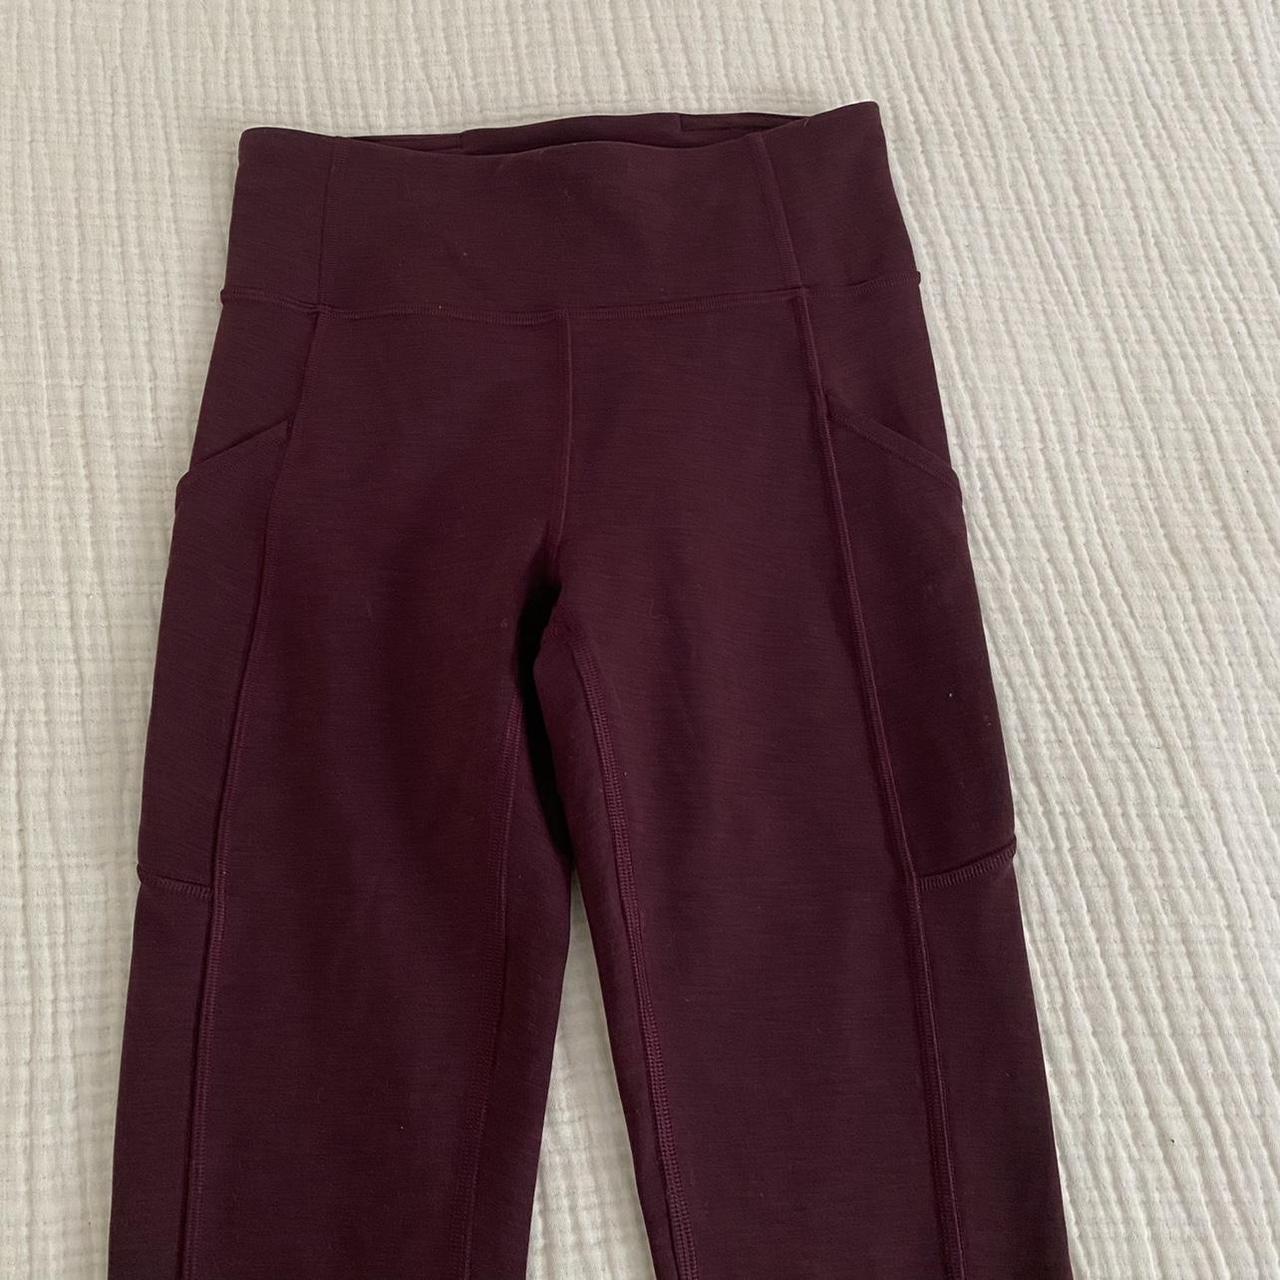 Red/burgundy lululemon leggings with pockets in - Depop